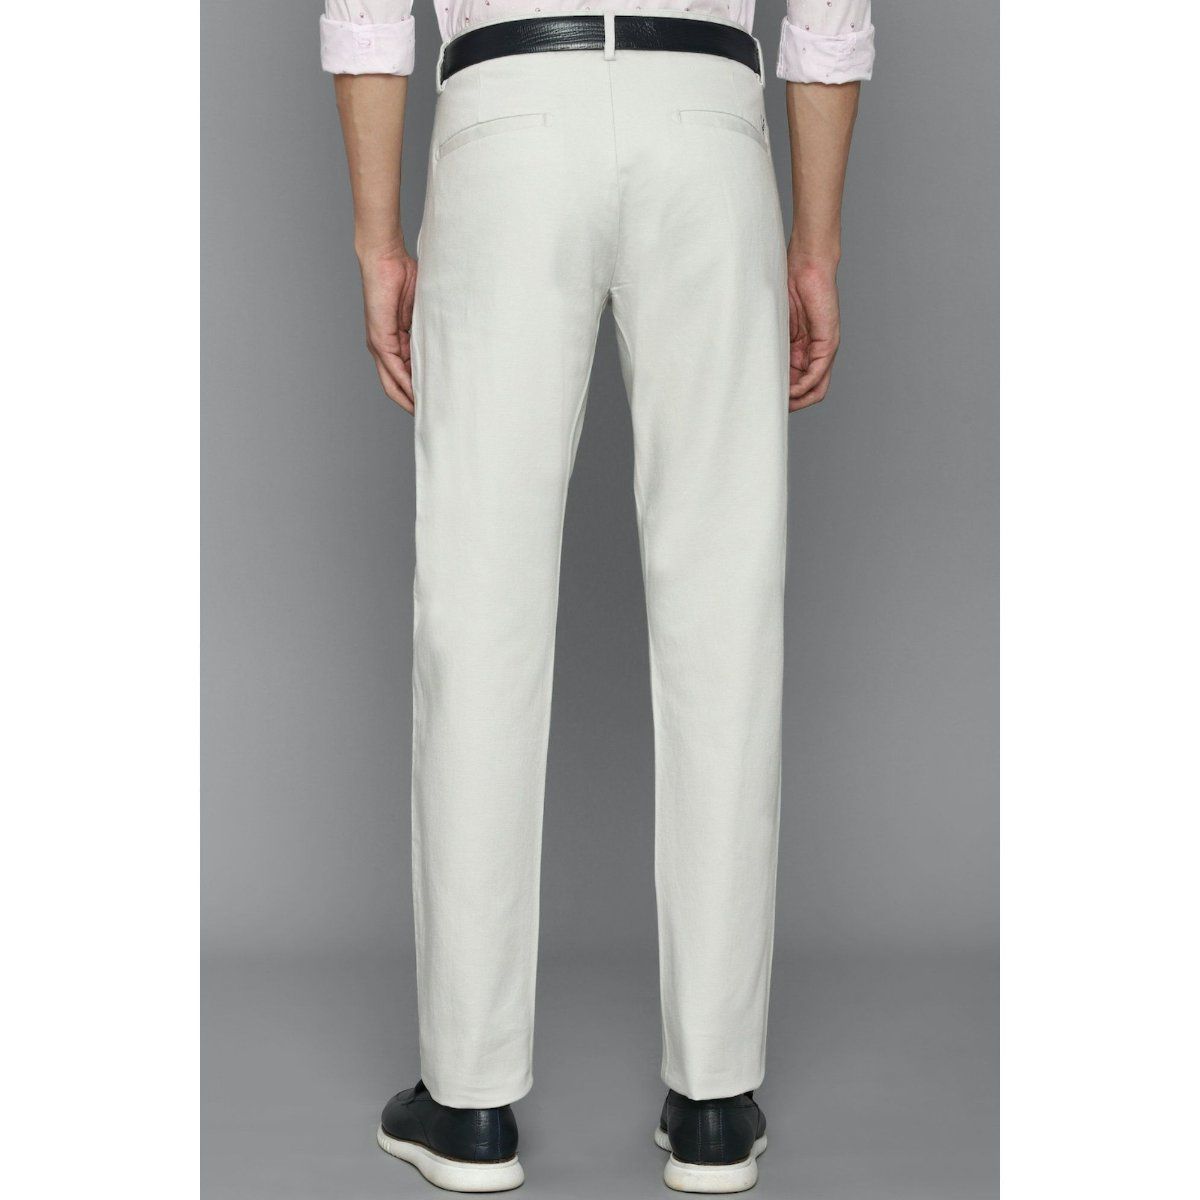 Pantaloons Beige Trousers - Selling Fast at Pantaloons.com